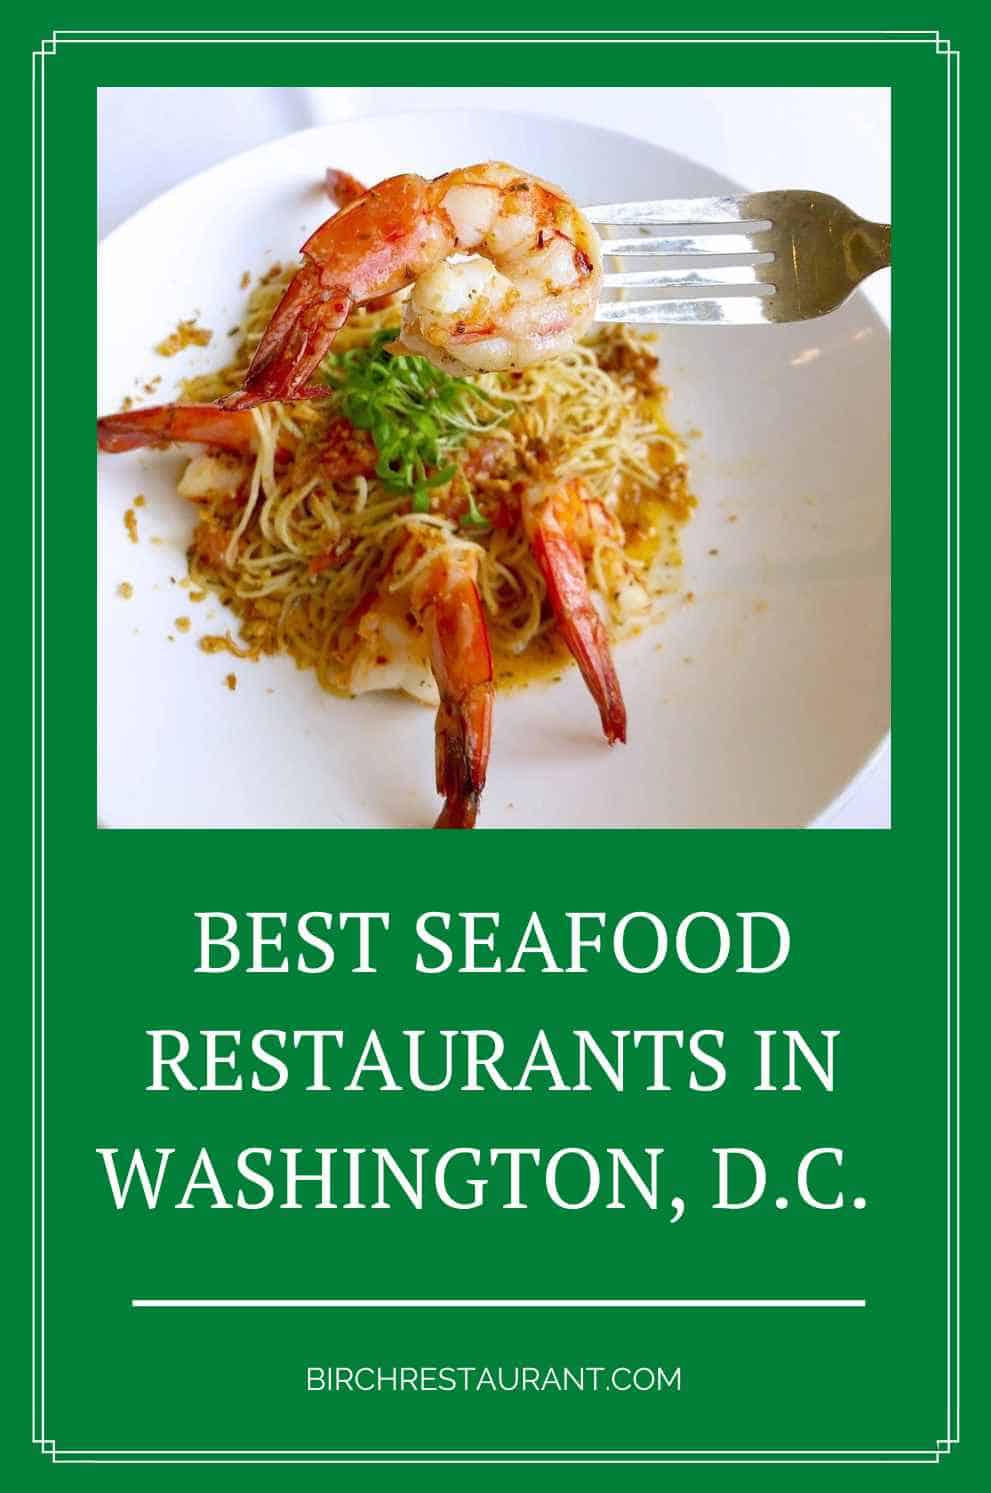 Seafood Restaurants in Washington, D.C.